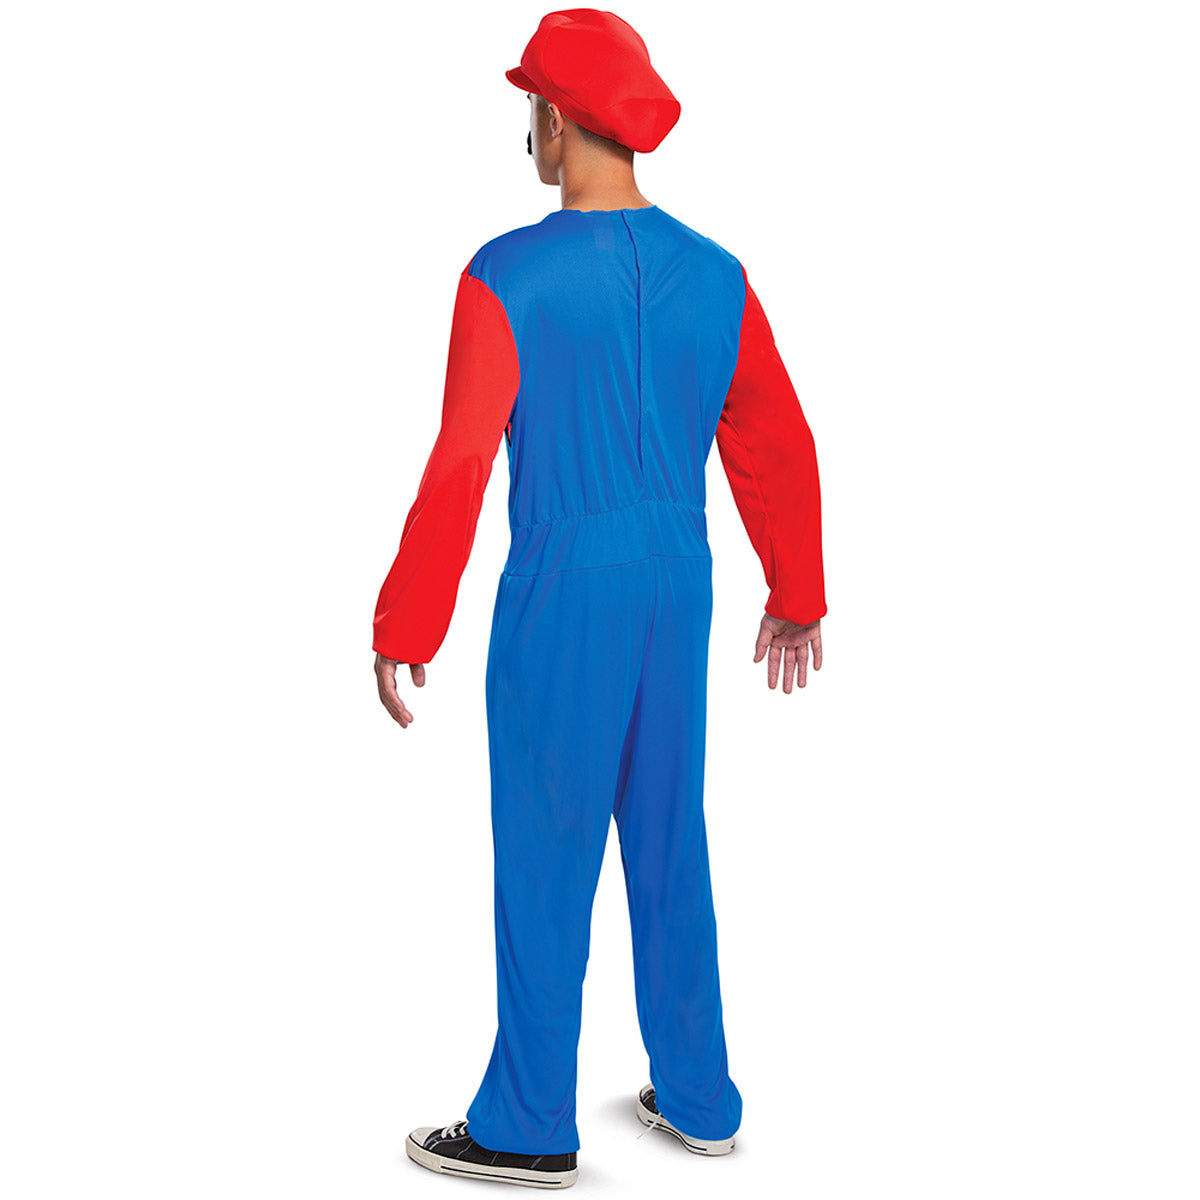 Mario Classic Adult Disguise 108459